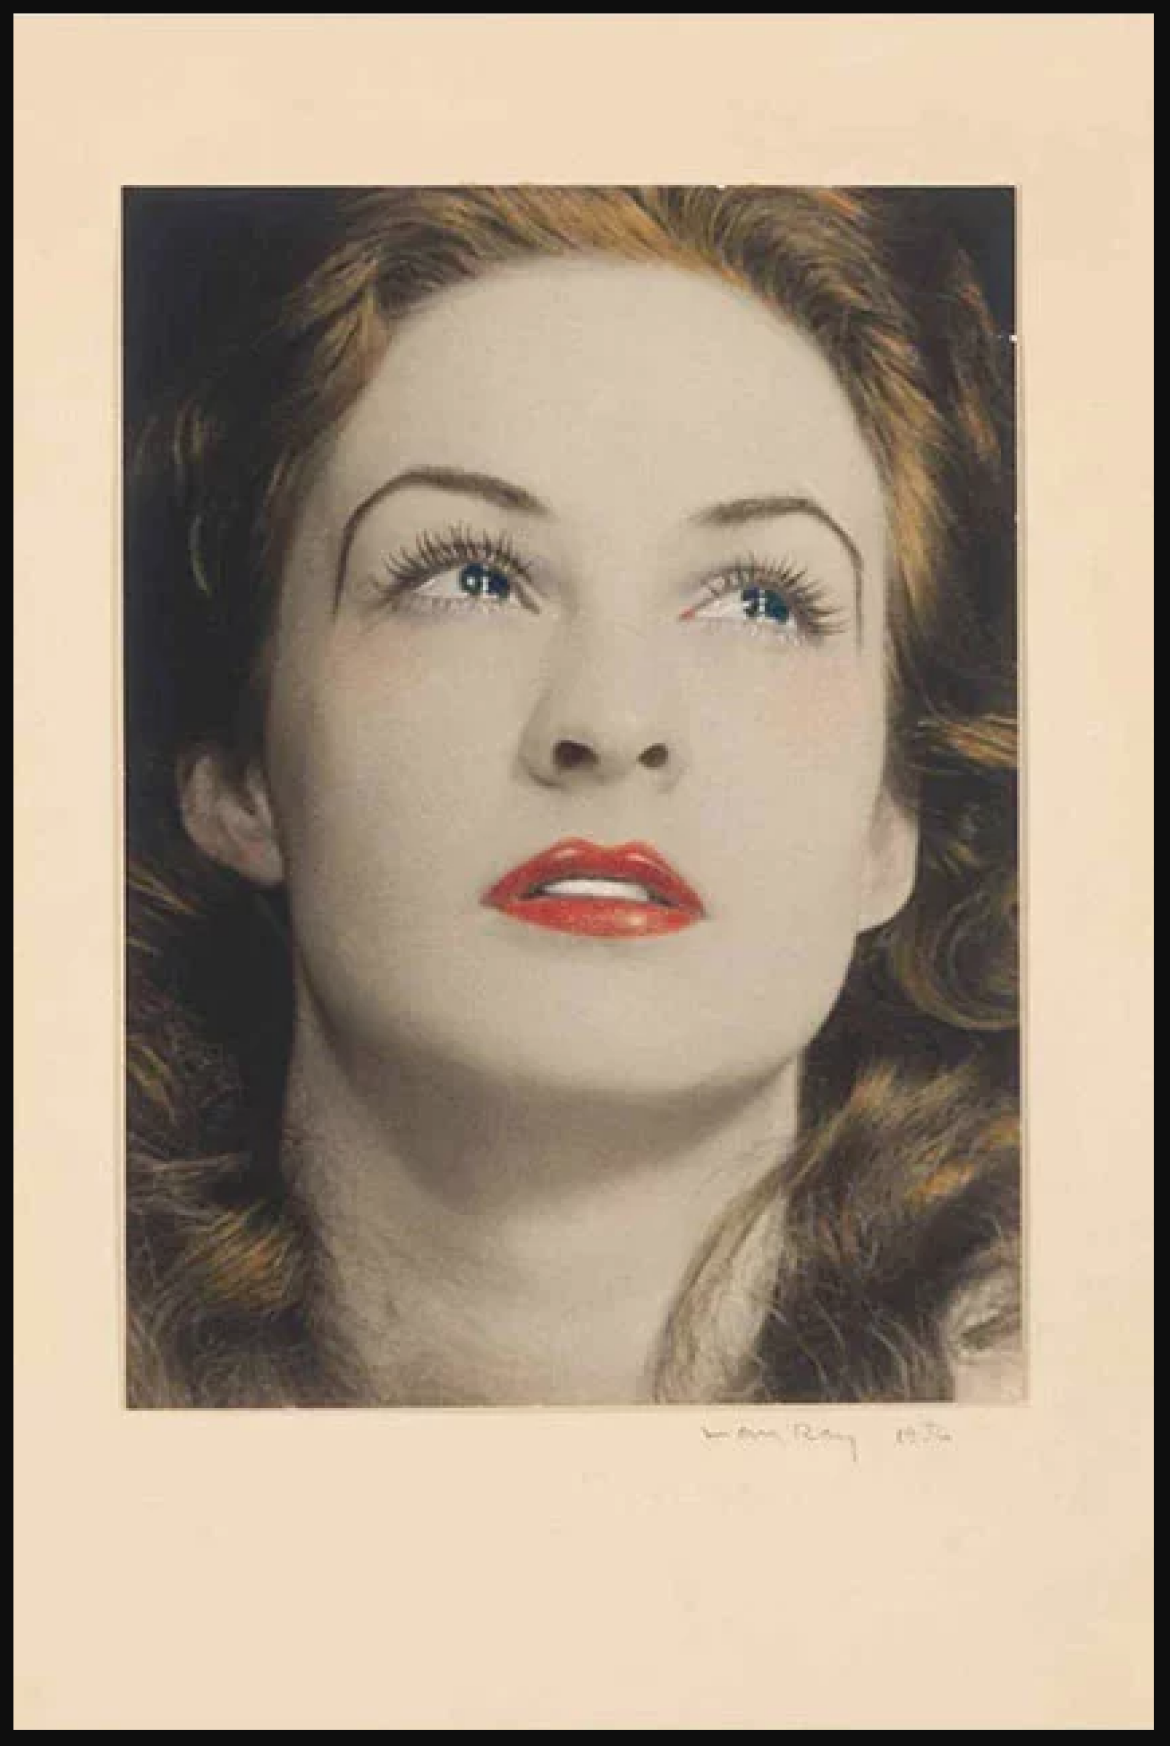 #19. Man Ray, Portrait of a Tearful Woman 1936 - 2017: $2,167,500